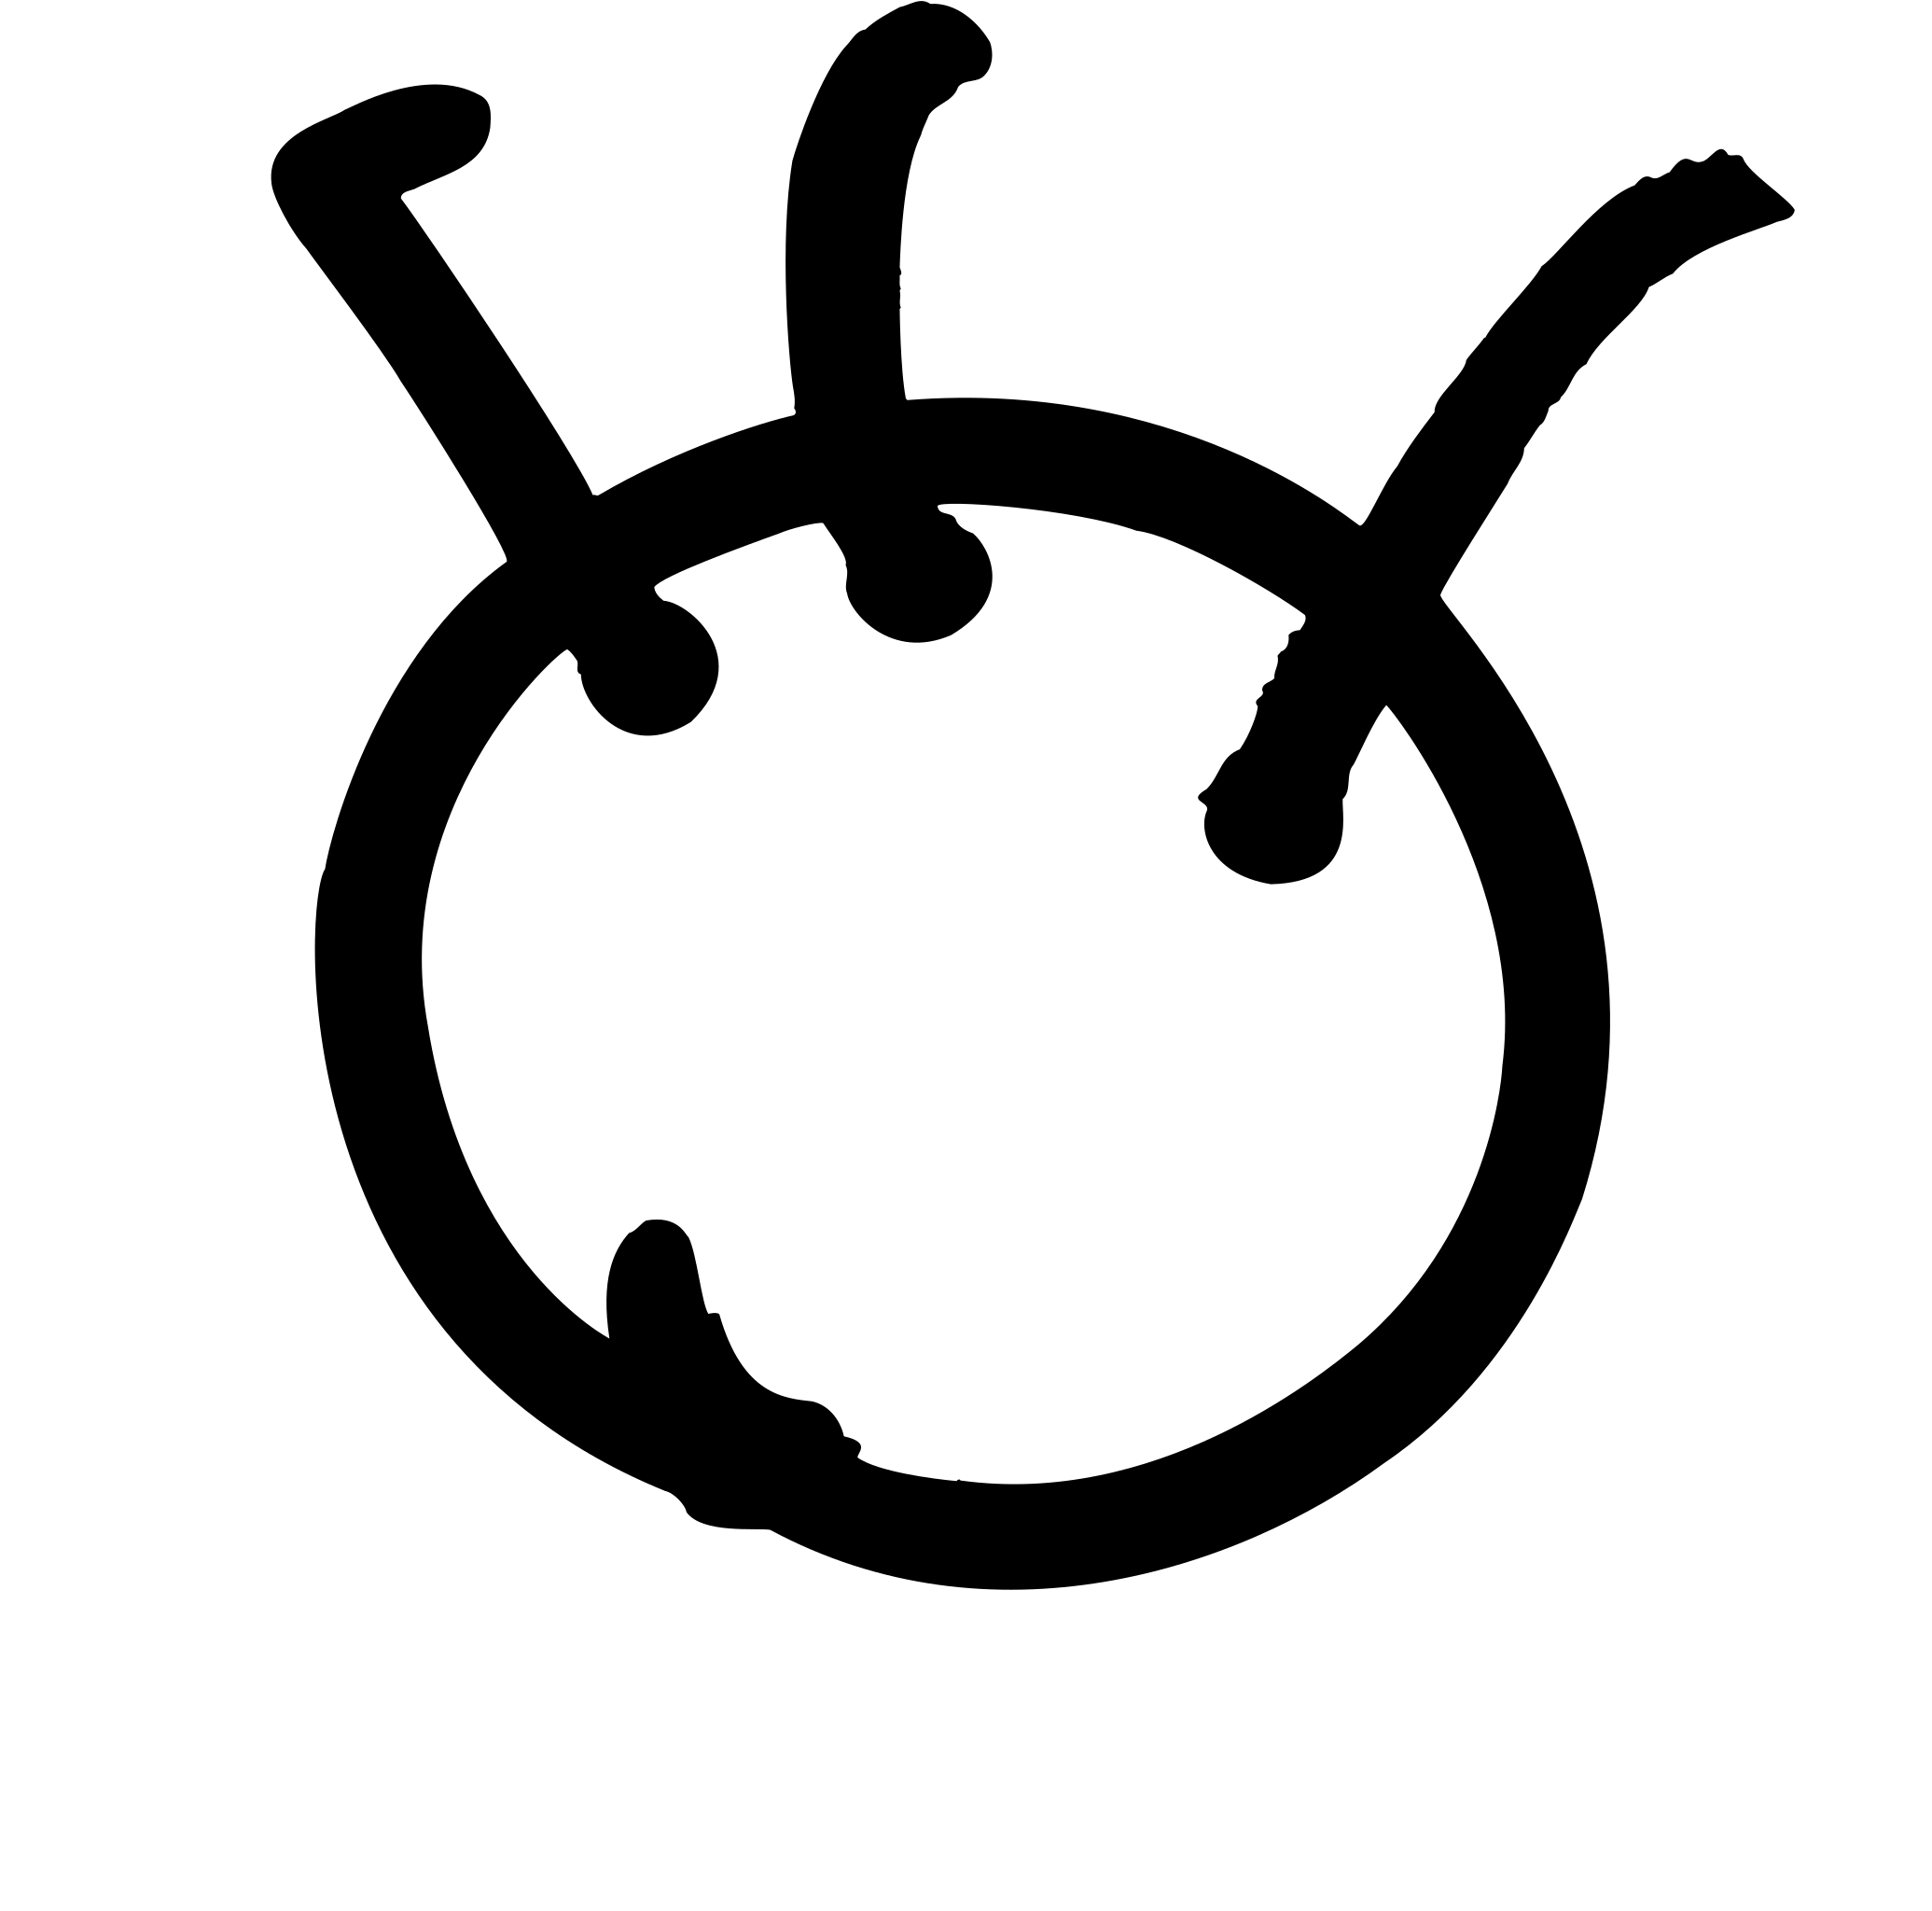 Fuji Television Network Logo Black And White - Super Mario Bros All Night Nippon (2400x2400)